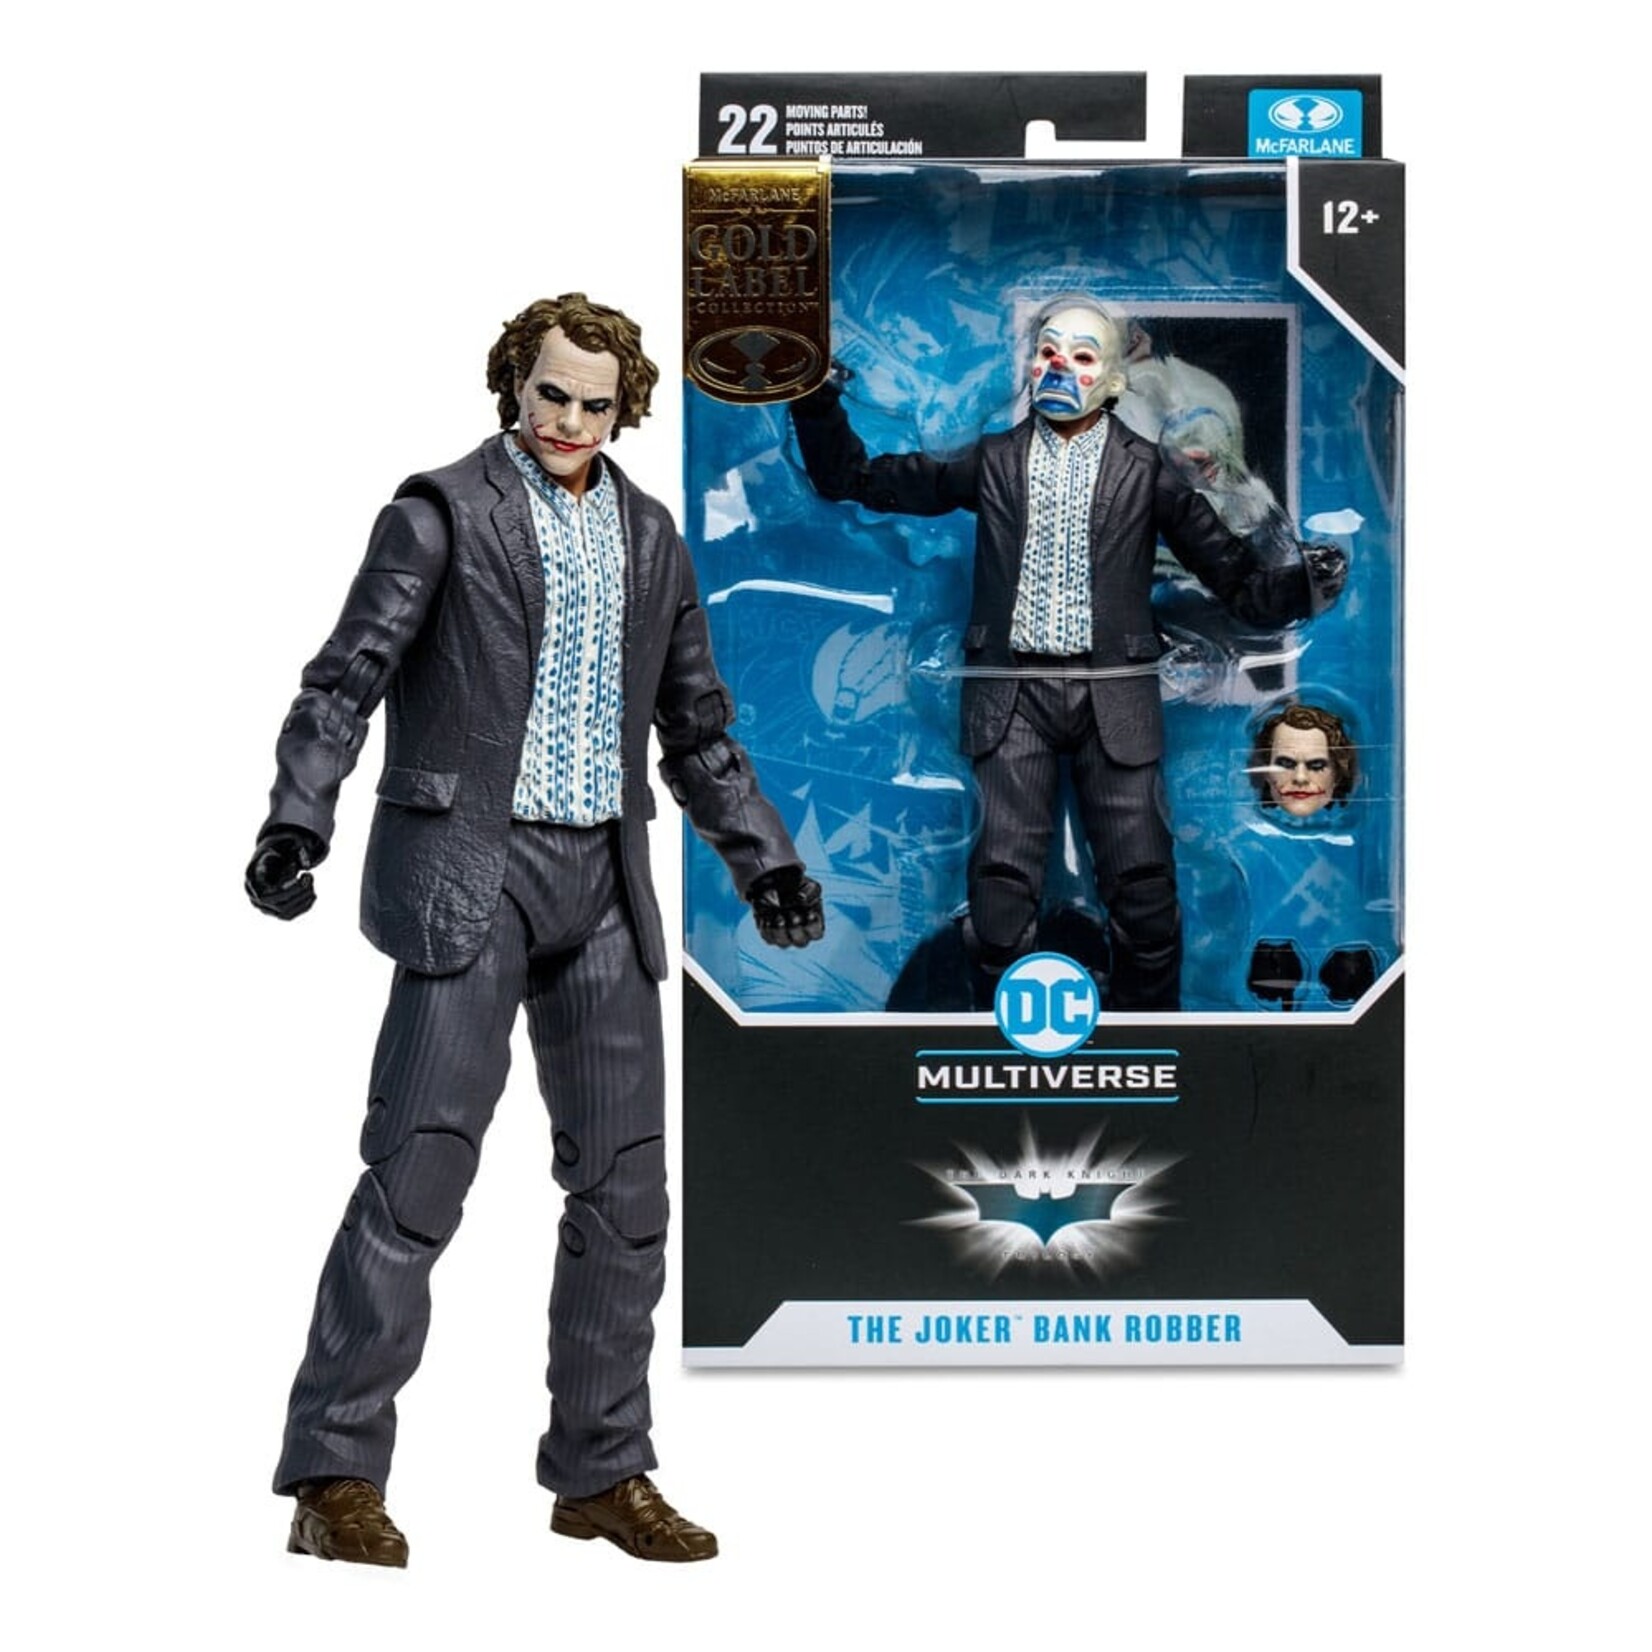 McFarlane Toys McFarlane Toys DC Comics The Dark Night The Joker Bank Robber Variant Multiverse Figure 17,8 cm